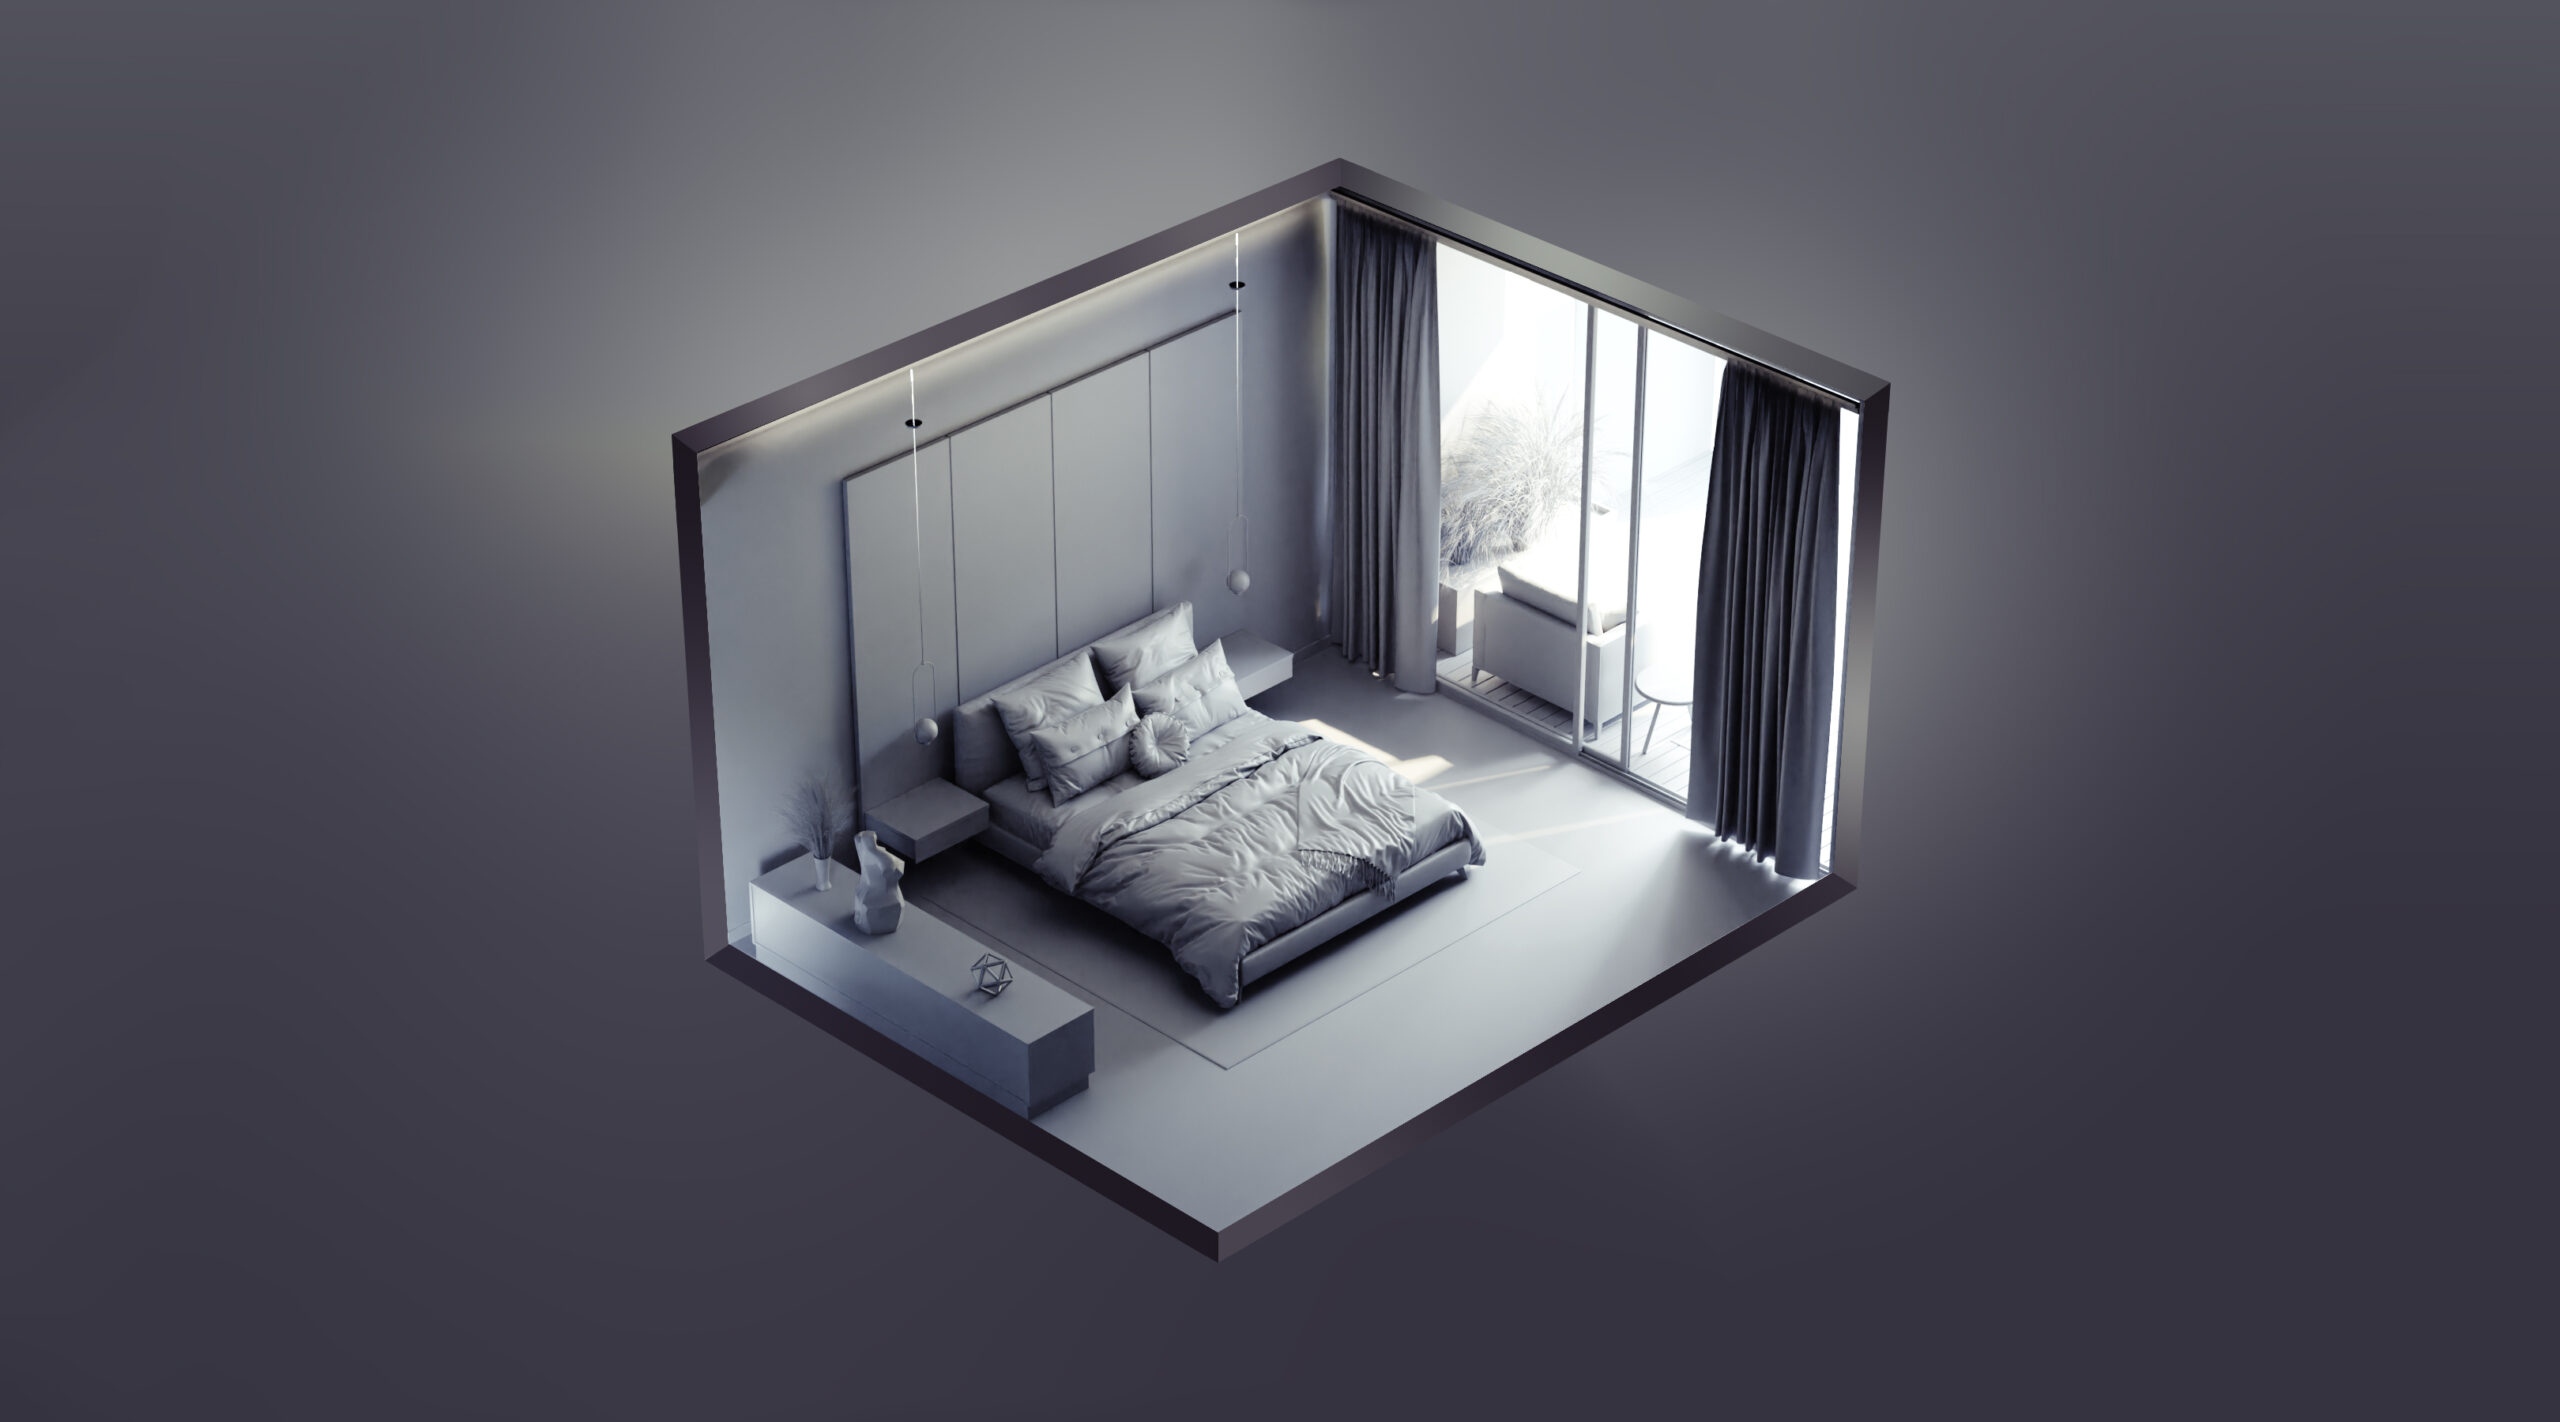 Bedroom Interior - Isometric view modeling